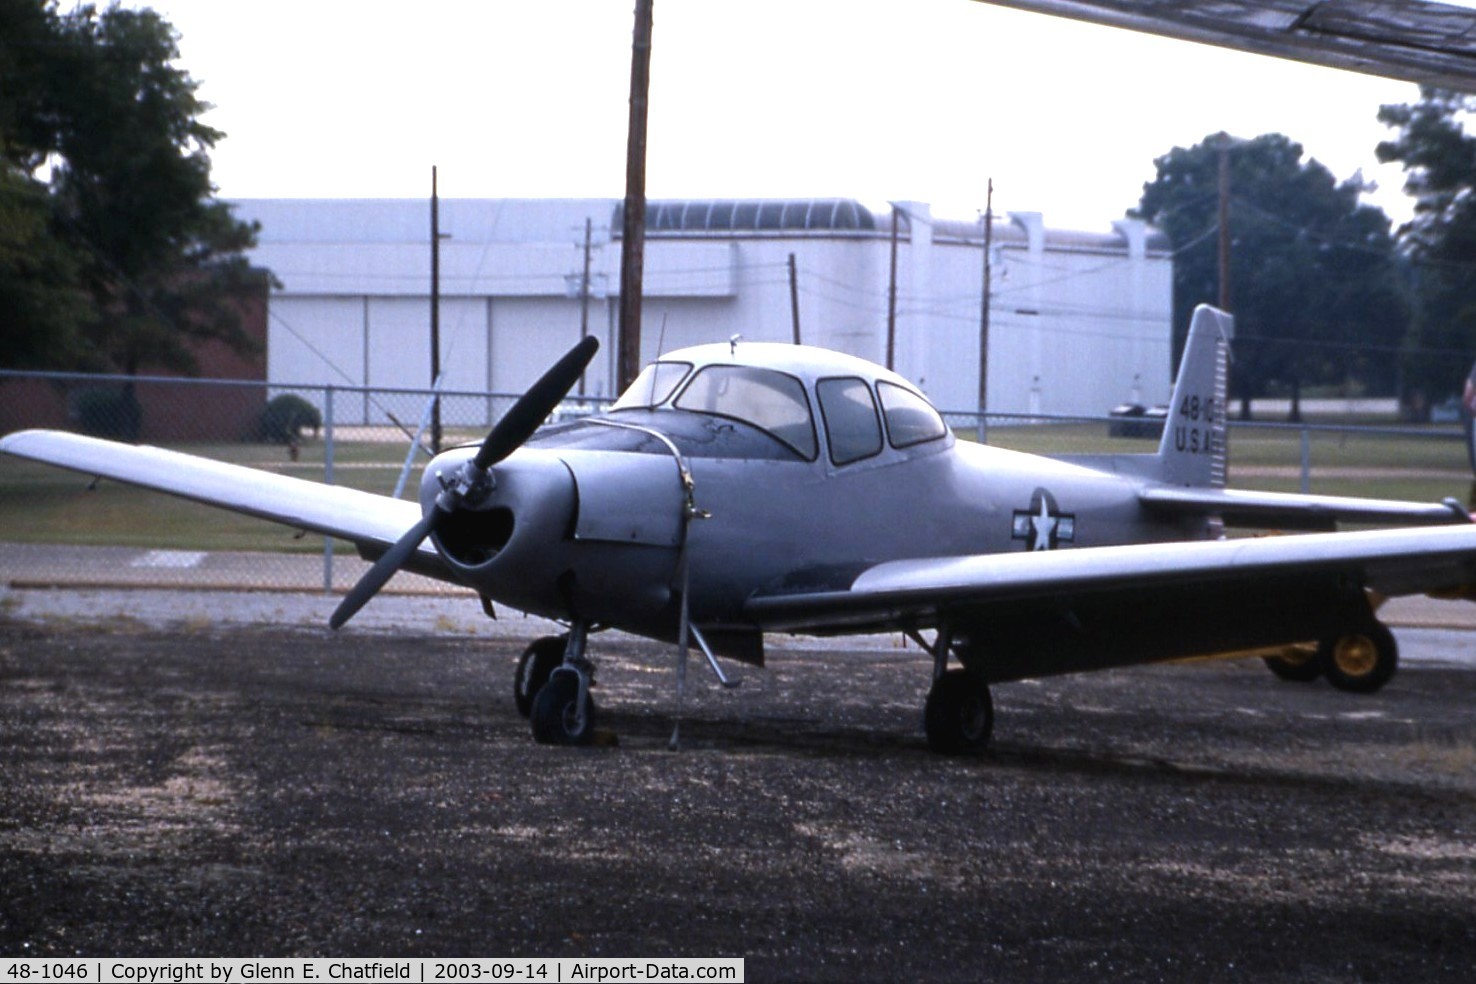 48-1046, 1948 Ryan Navion L-17B C/N NAV-4-1752, L-17B at the Army Aviation Museum